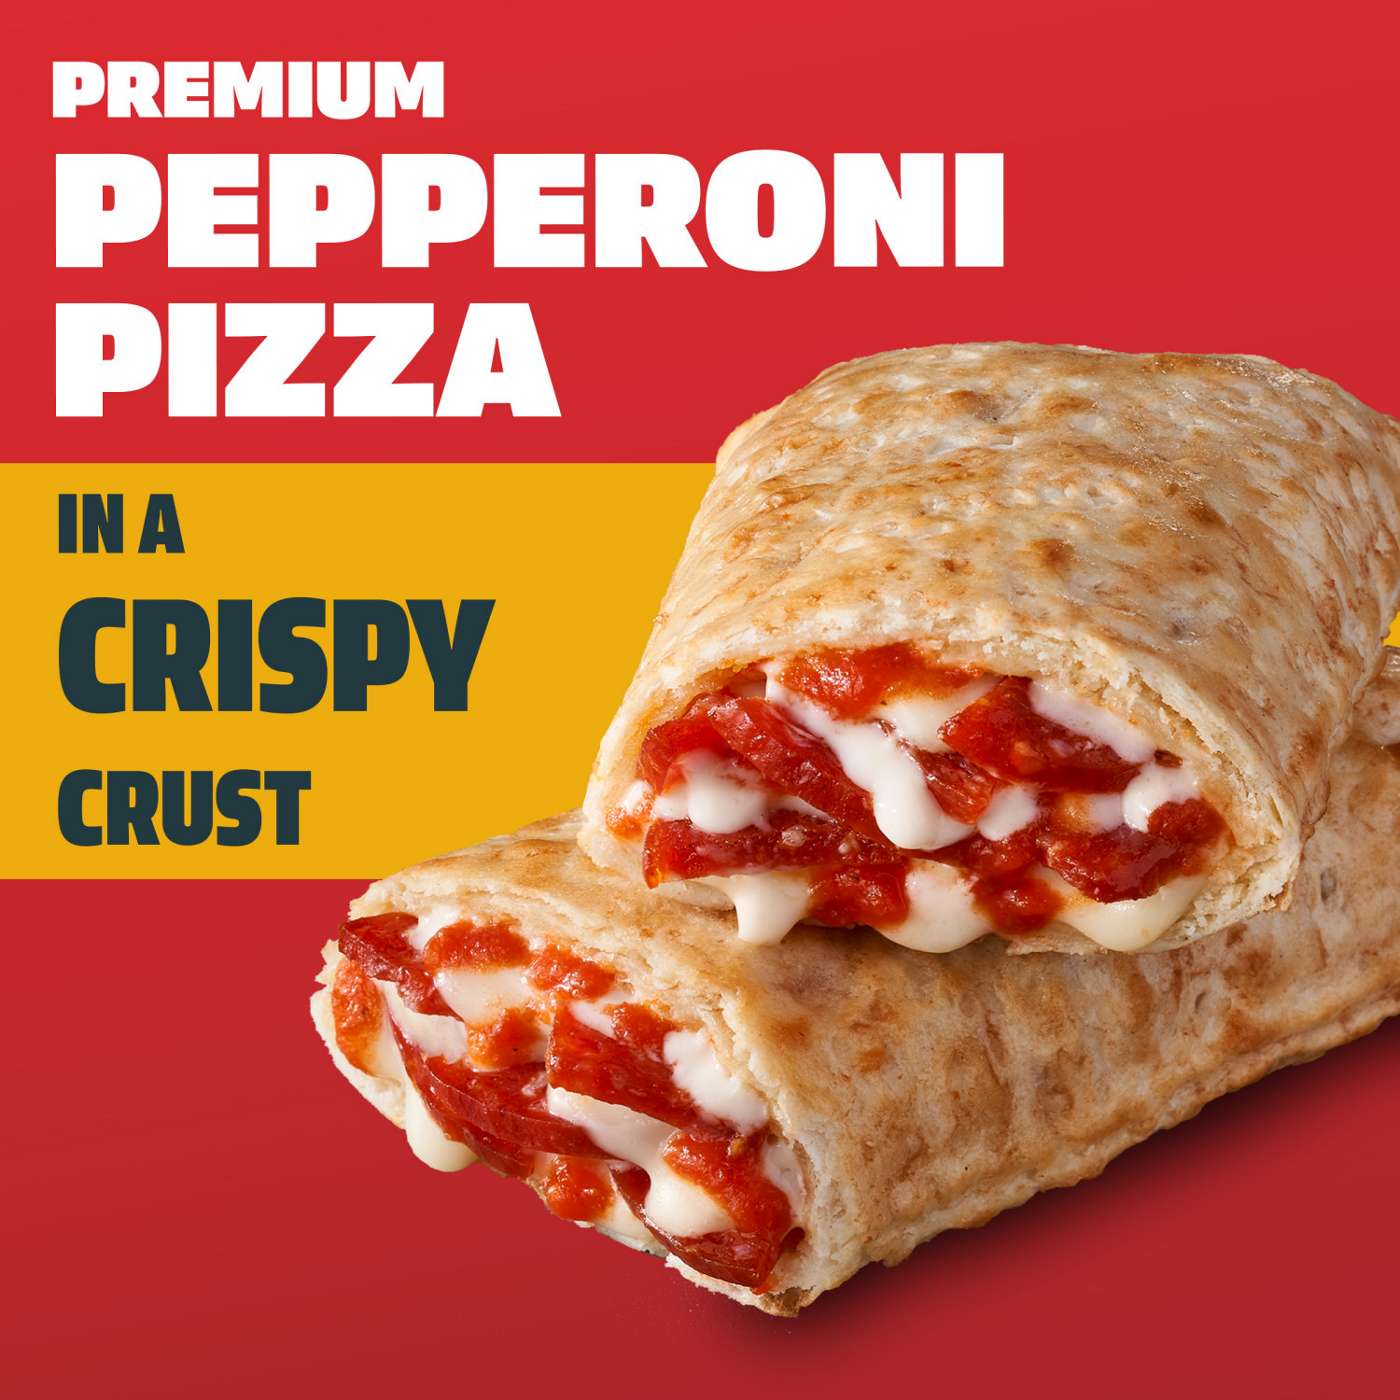 Hot Pockets Pepperoni Pizza Frozen Sandwiches - Crispy Crust; image 3 of 6